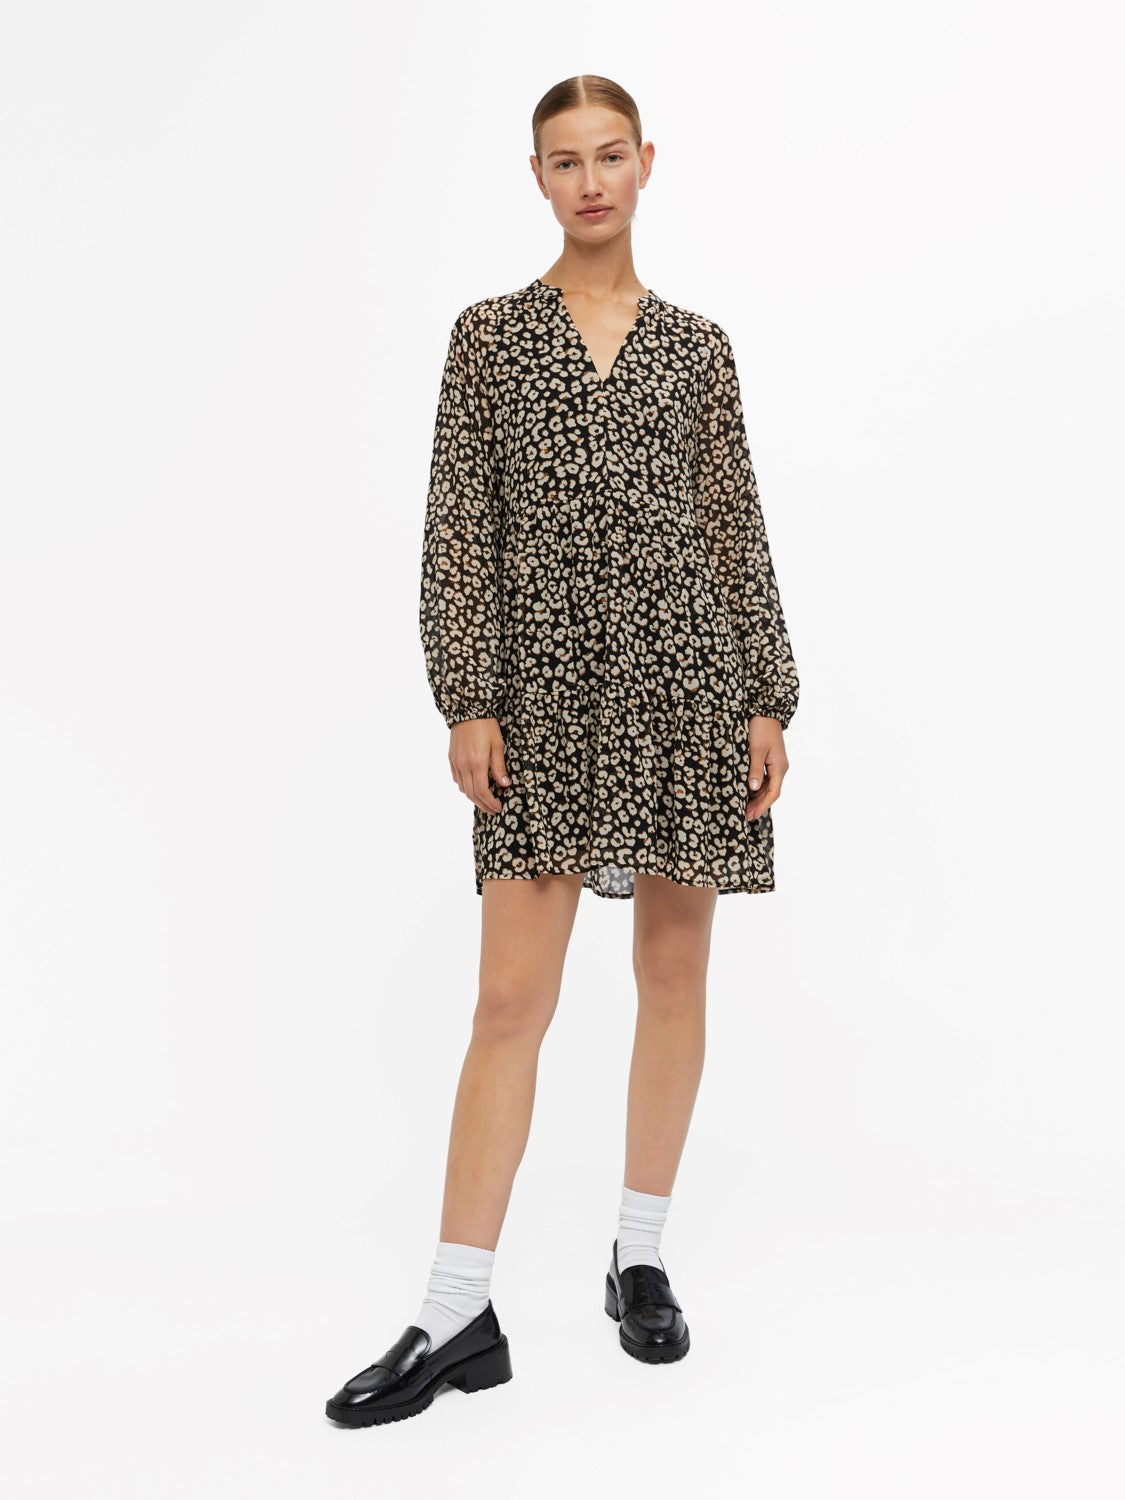 Braylon Smock Dress (Leopard)